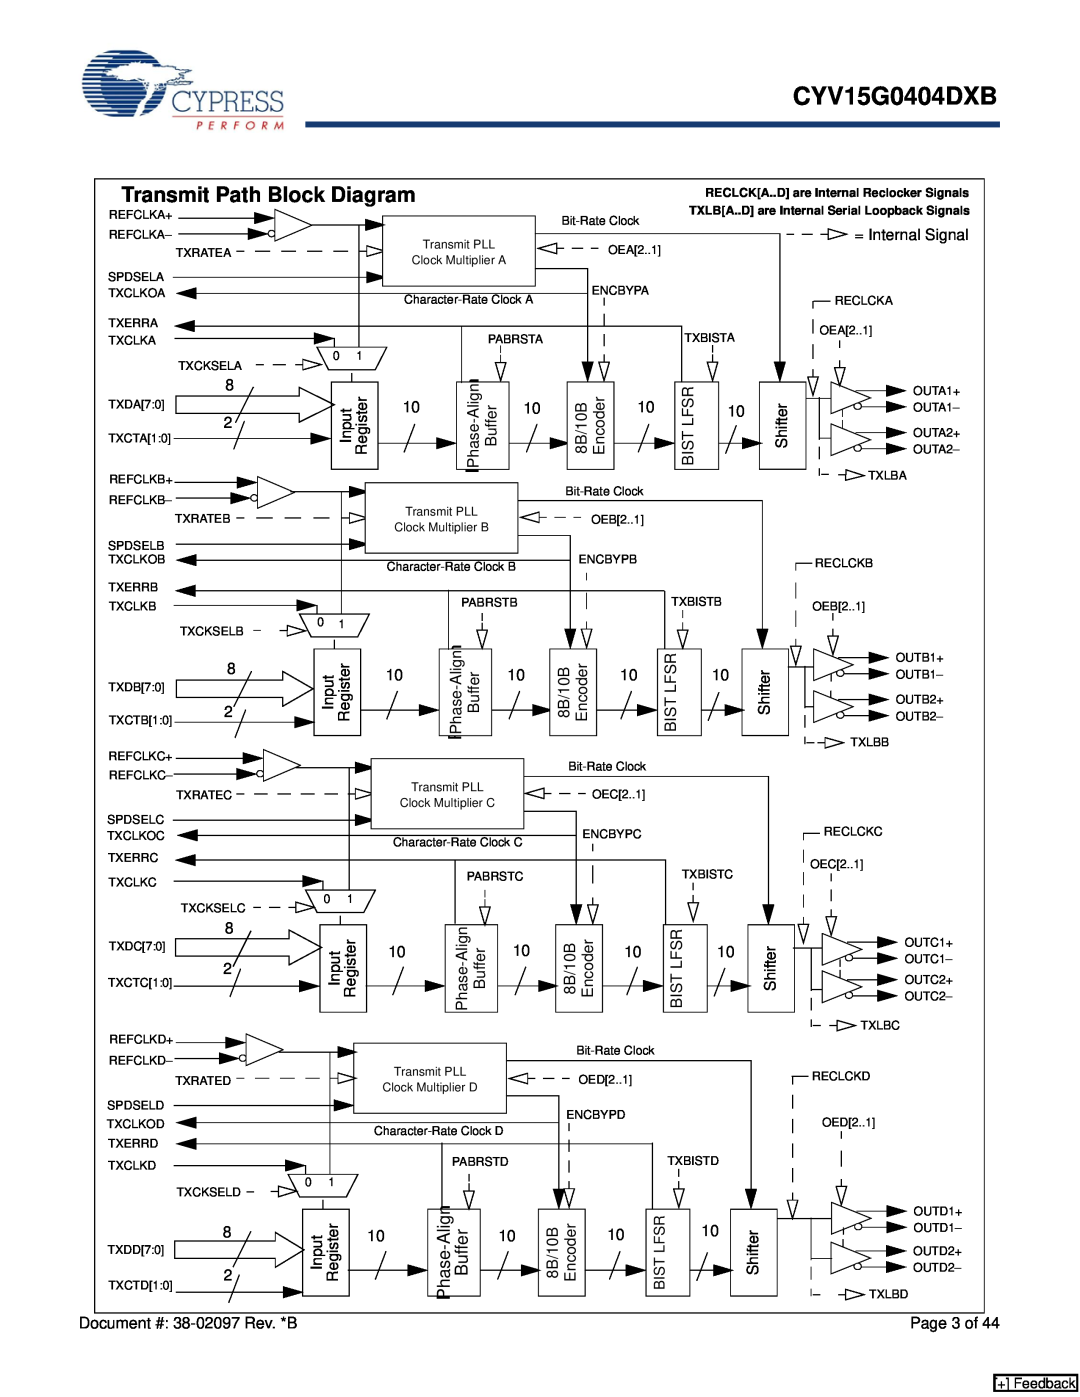 Cypress CYV15G0404DXB manual Transmit Path Block Diagram, Phase-Align Buffer 